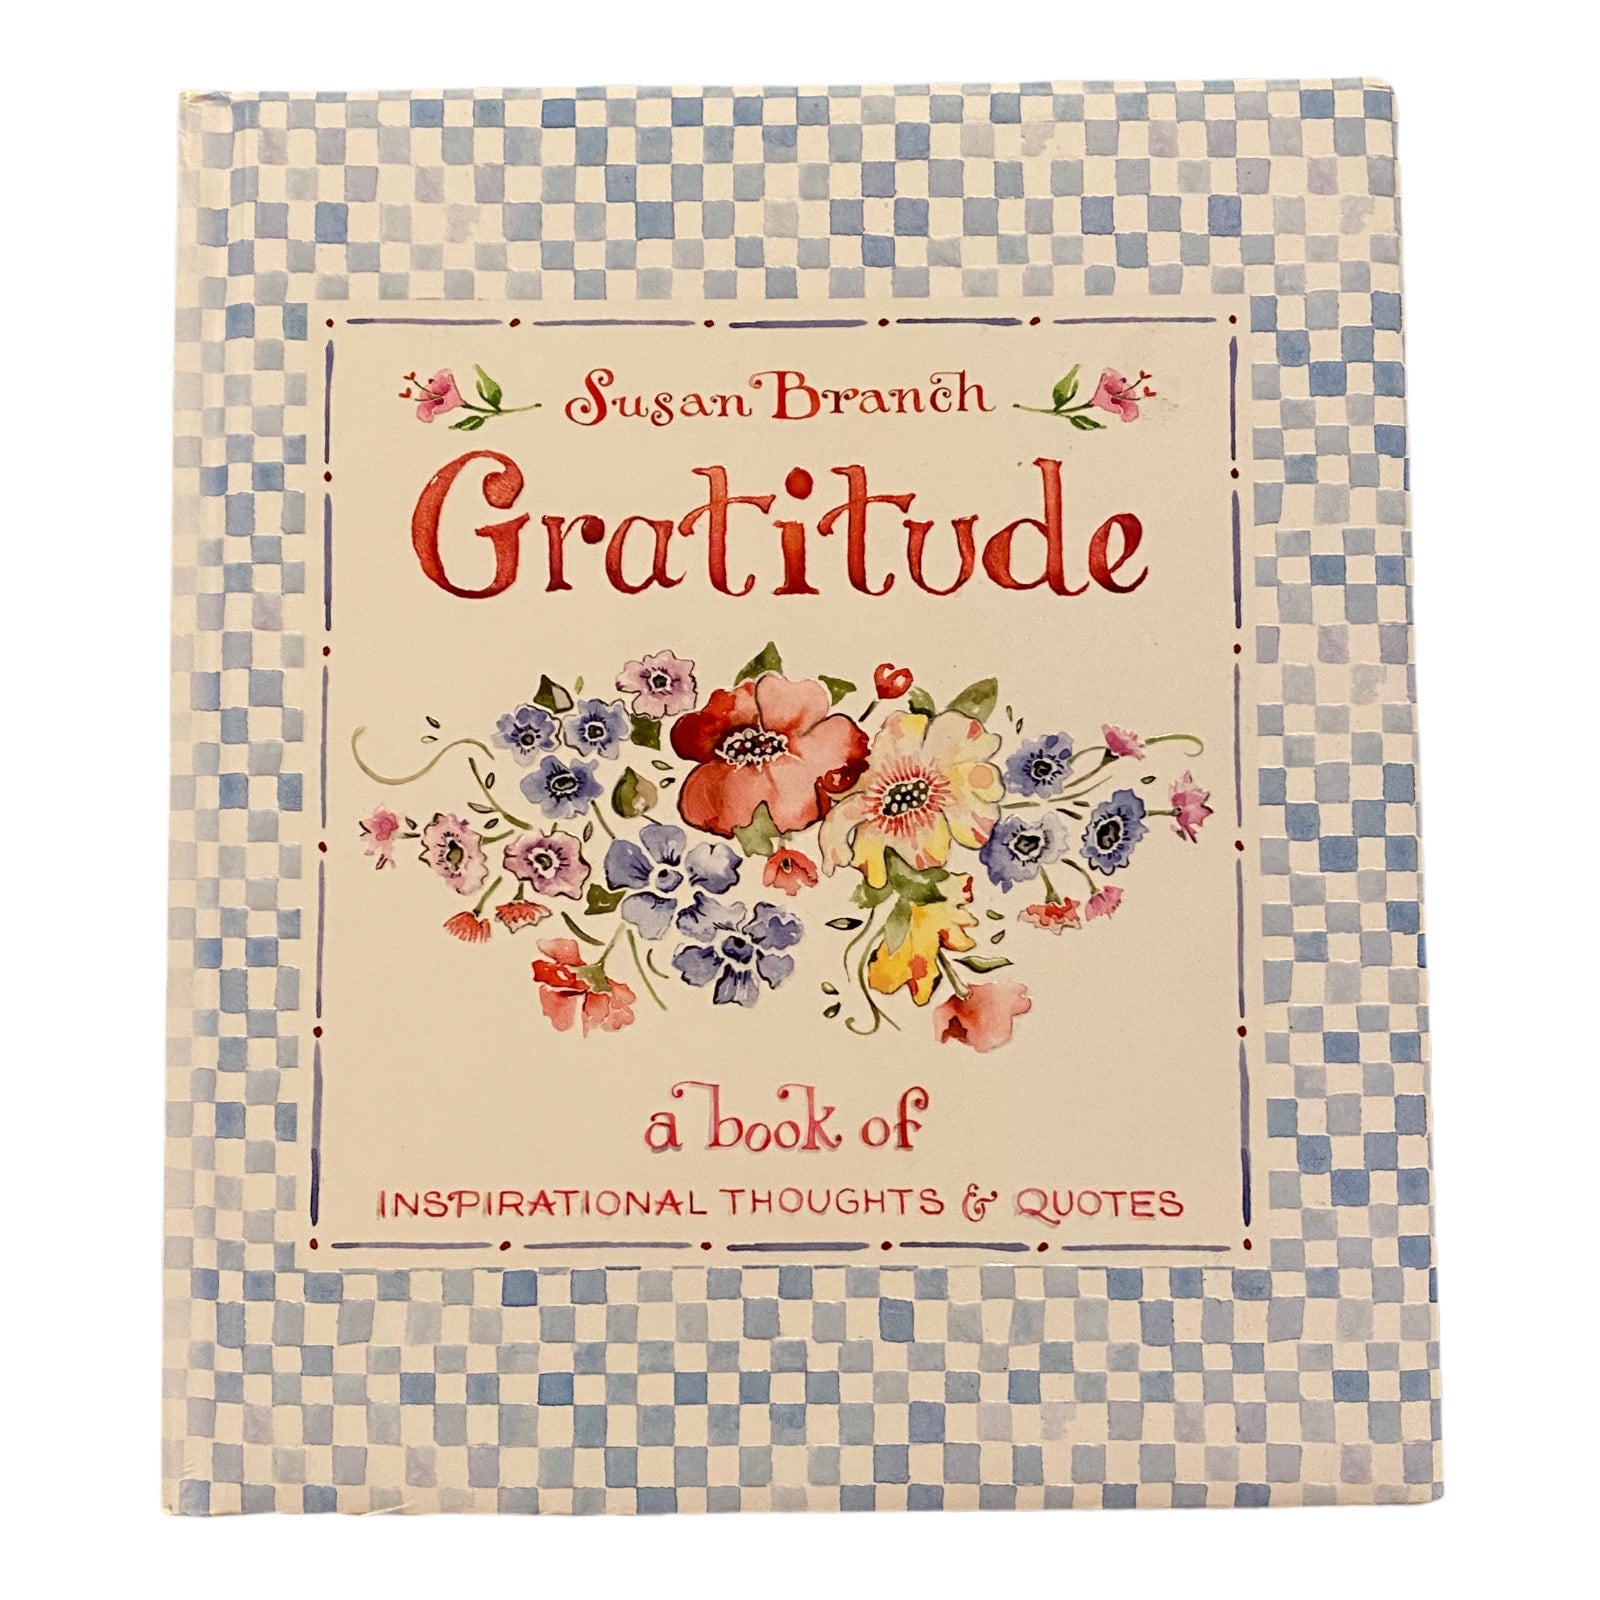 Gratitude Gift Book - Susan Branch - *SIGNED*